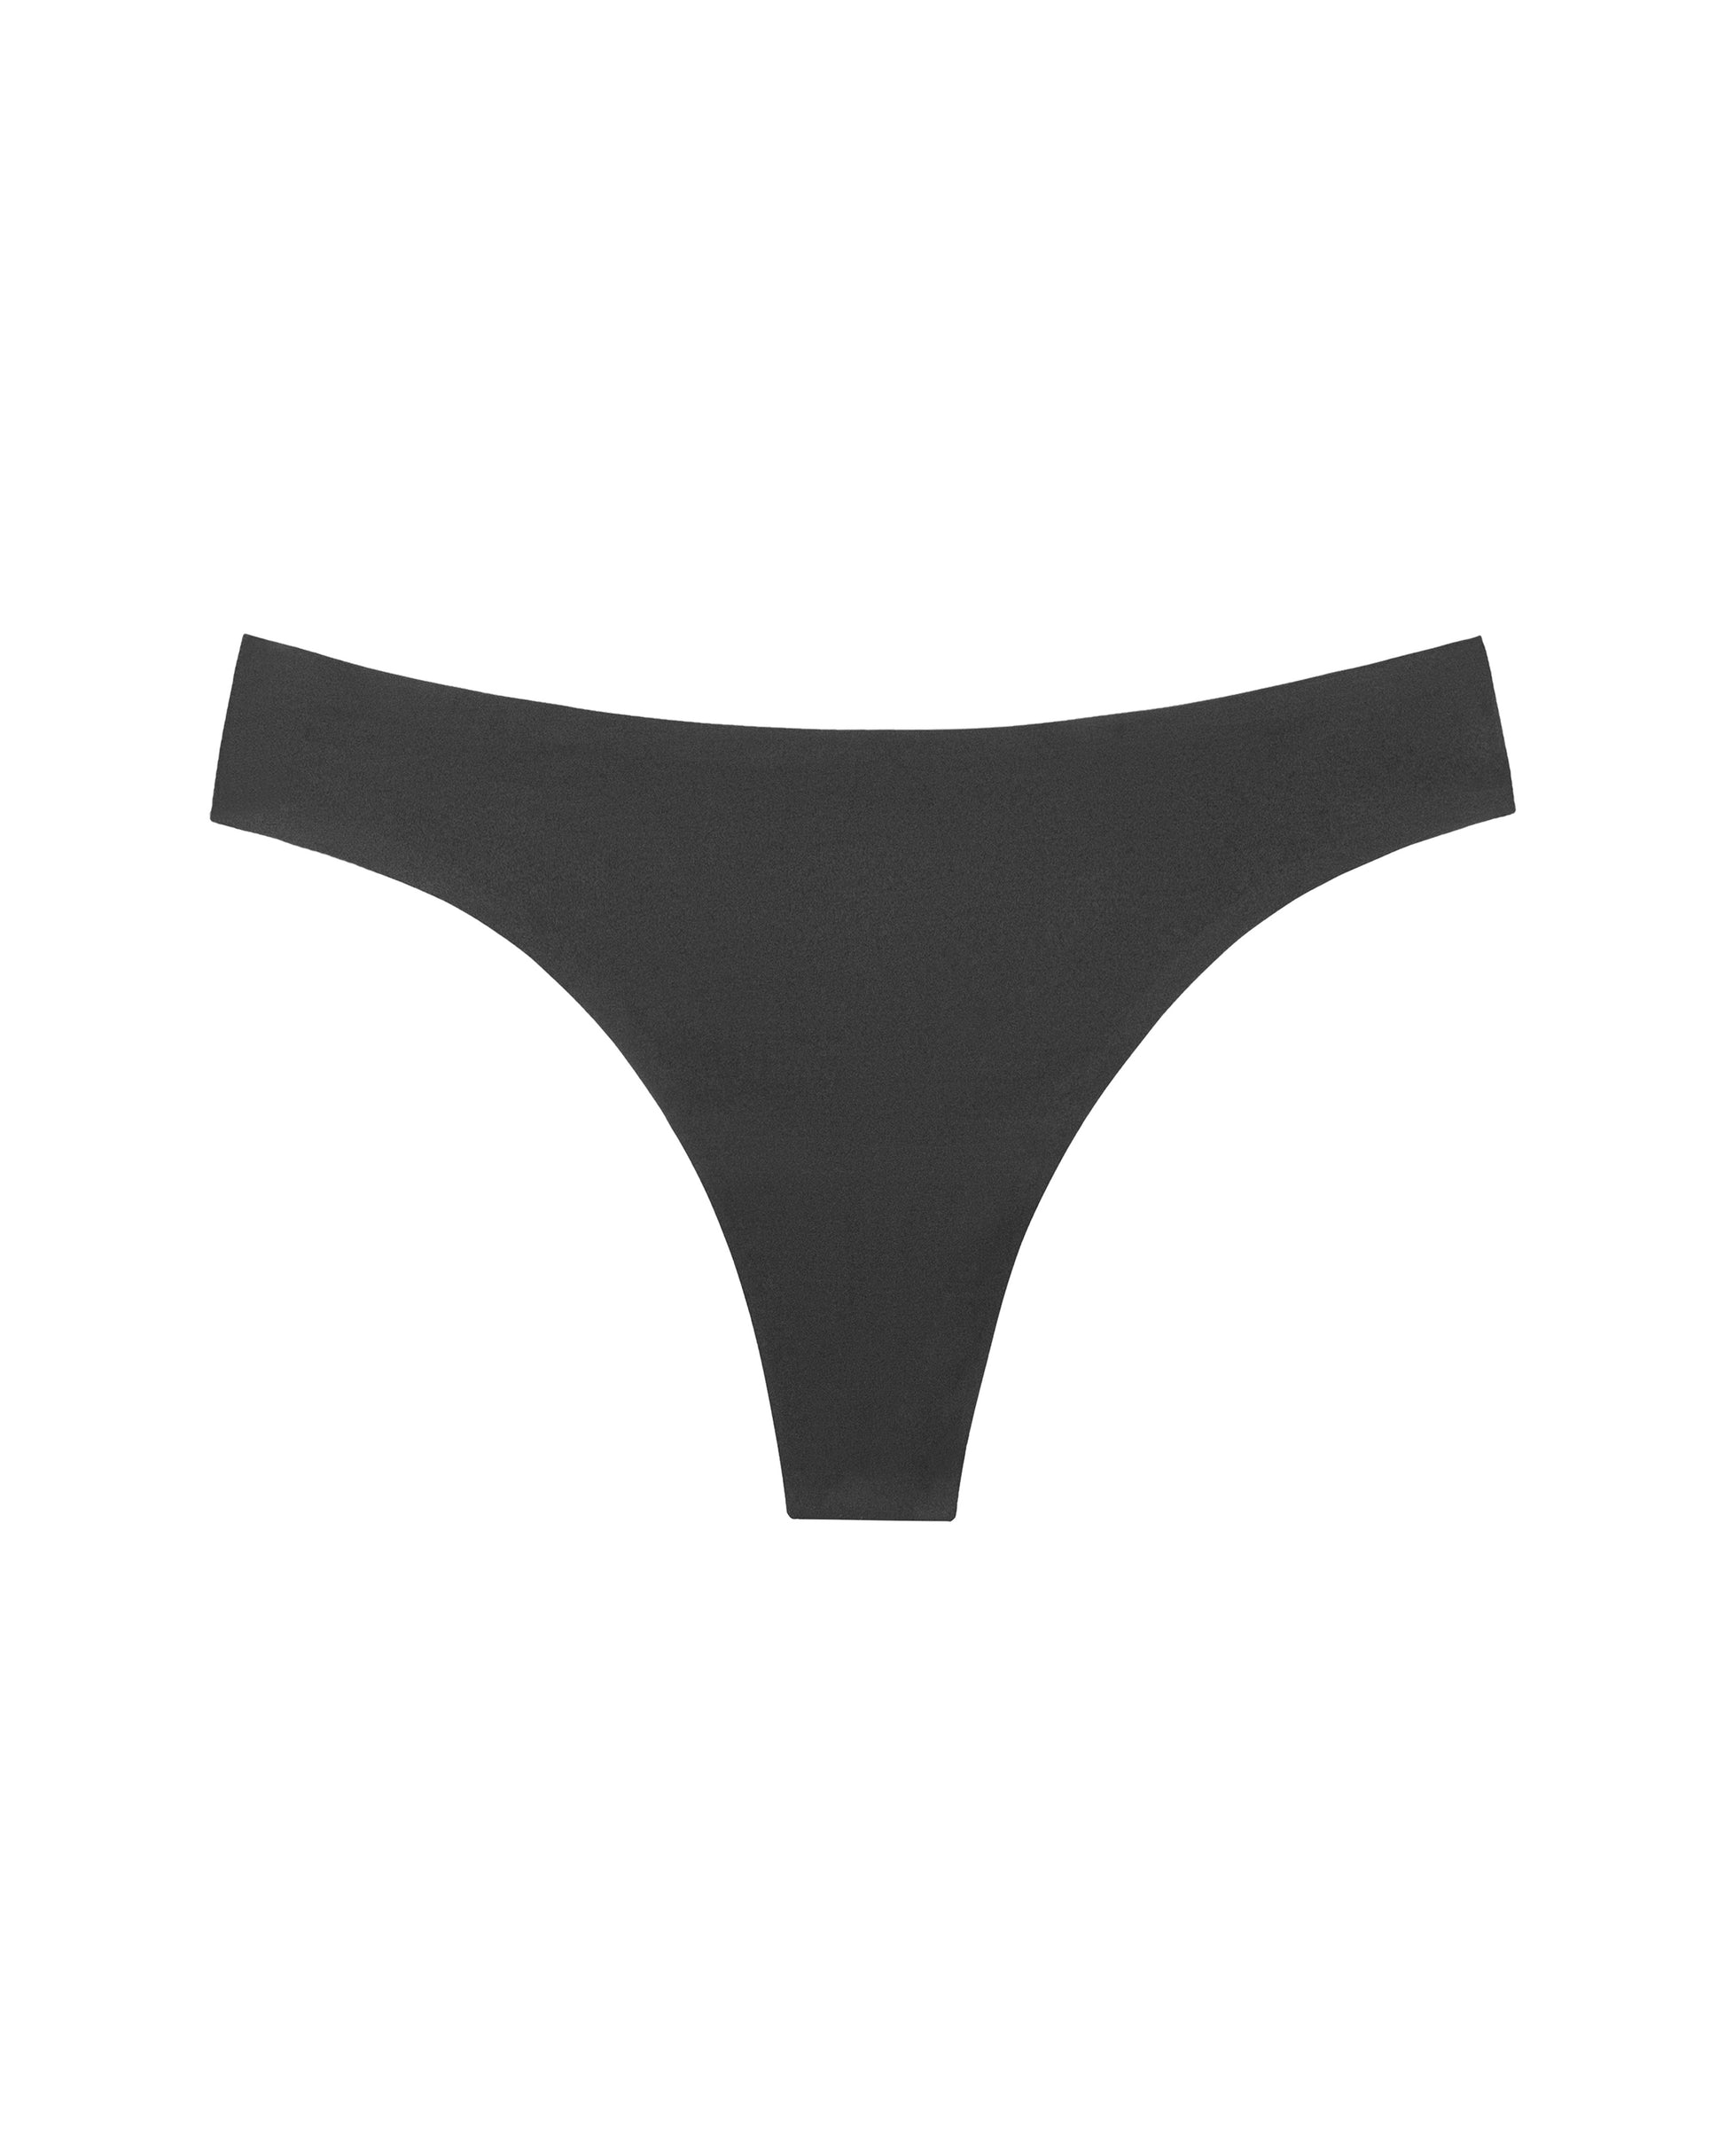 Thong Period Underwear, Leak-proof